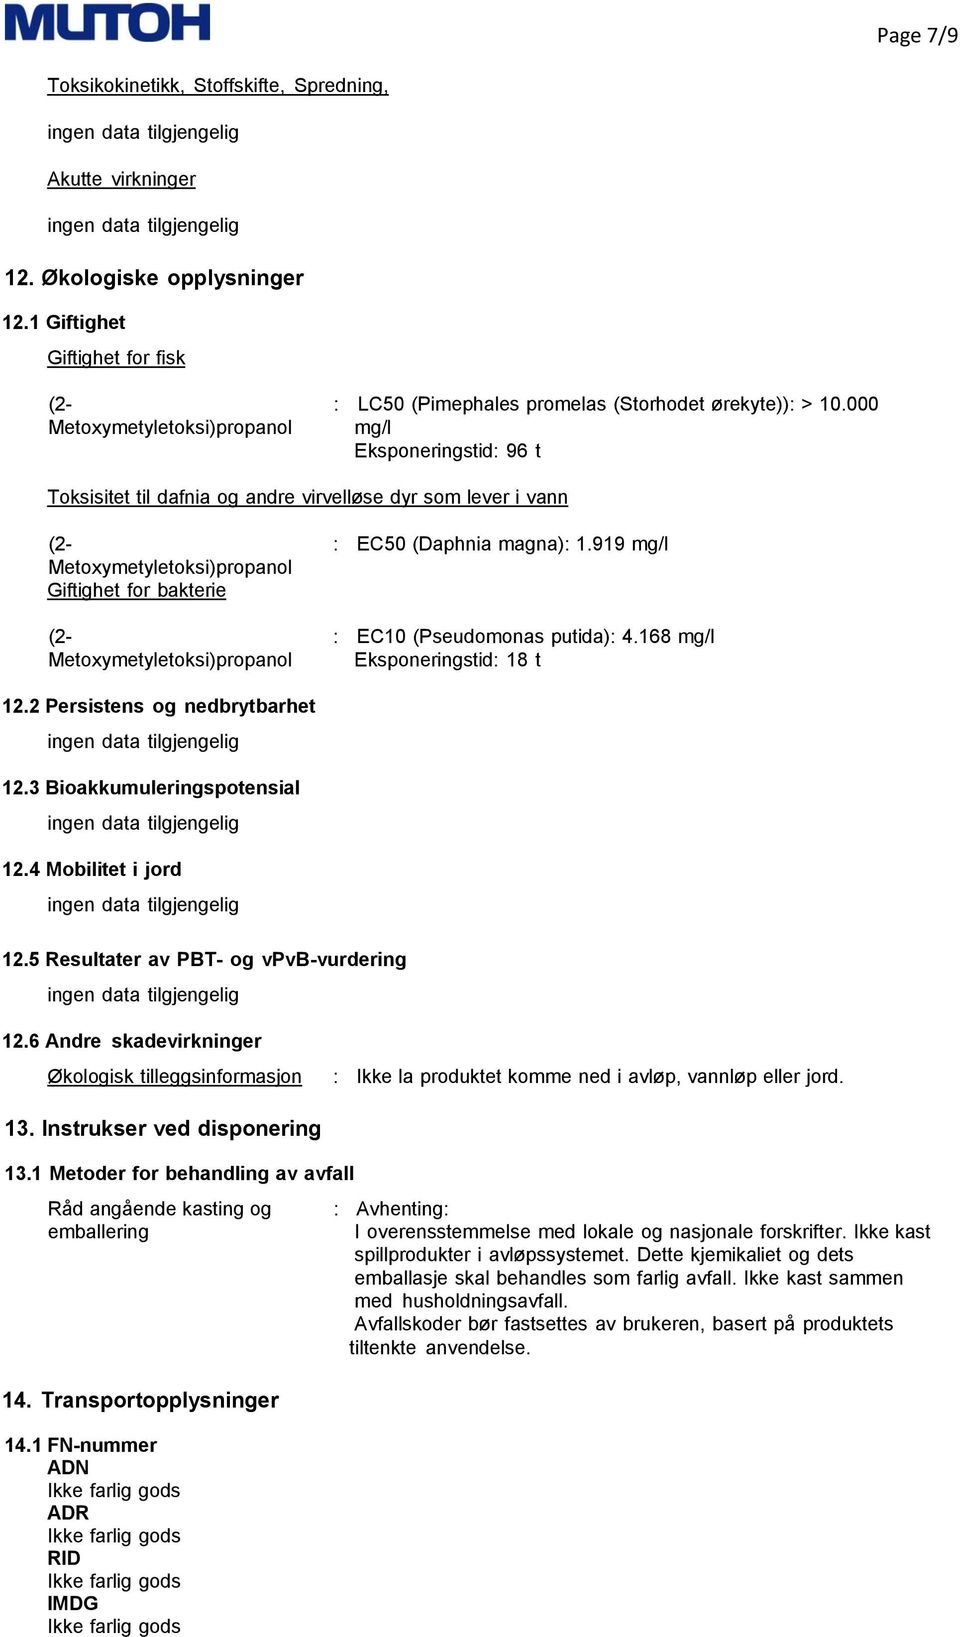 919 mg/l Metoxymetyletoksi)propanol Giftighet for bakterie (2- : EC10 (Pseudomonas putida): 4.168 mg/l Metoxymetyletoksi)propanol Eksponeringstid: 18 t 12.2 Persistens og nedbrytbarhet 12.